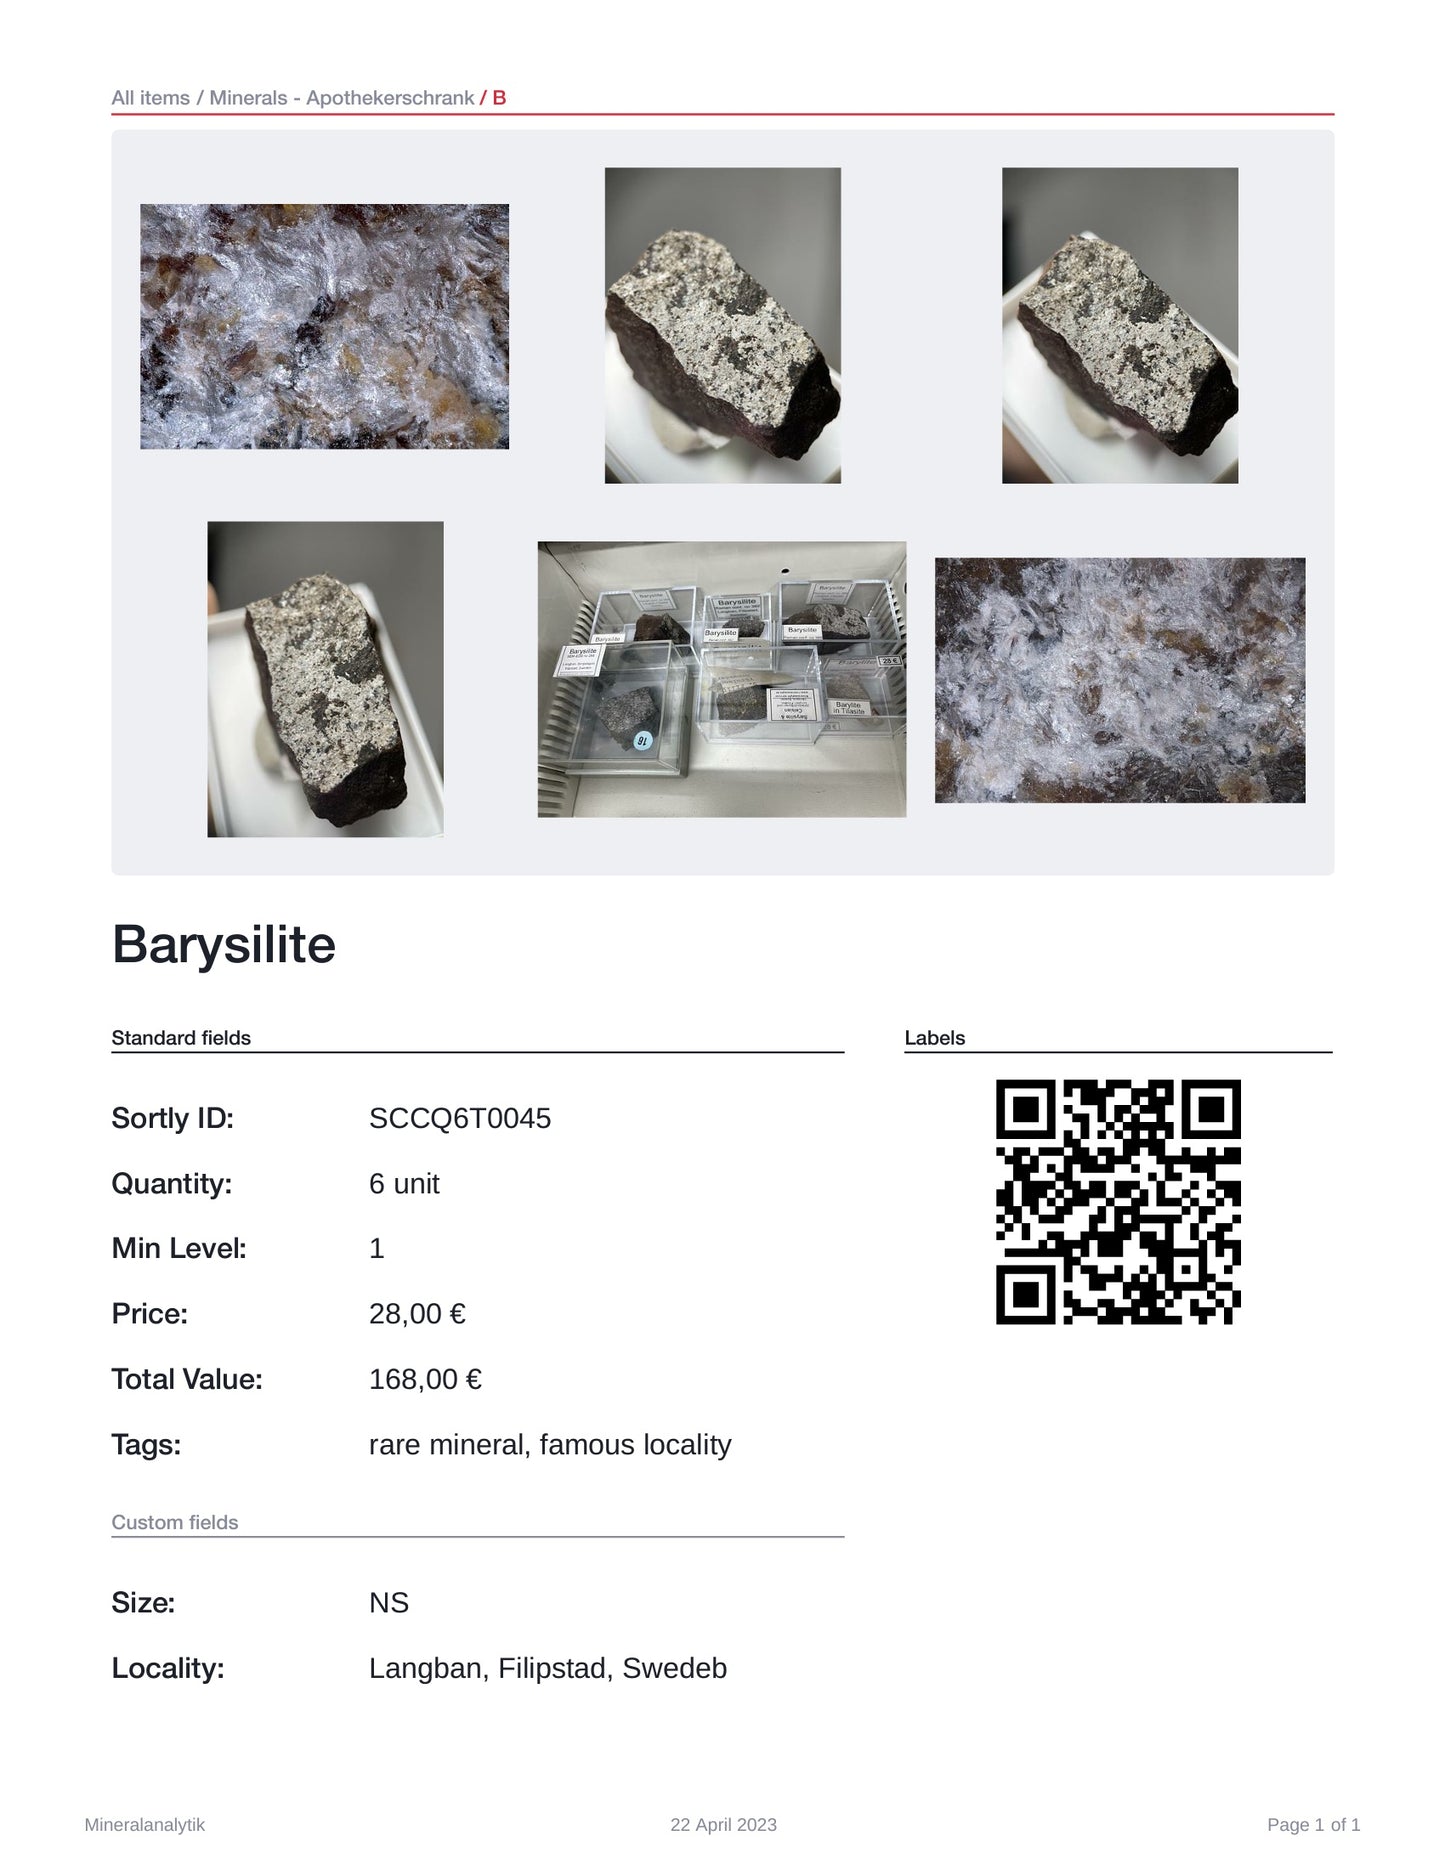 Barysilite